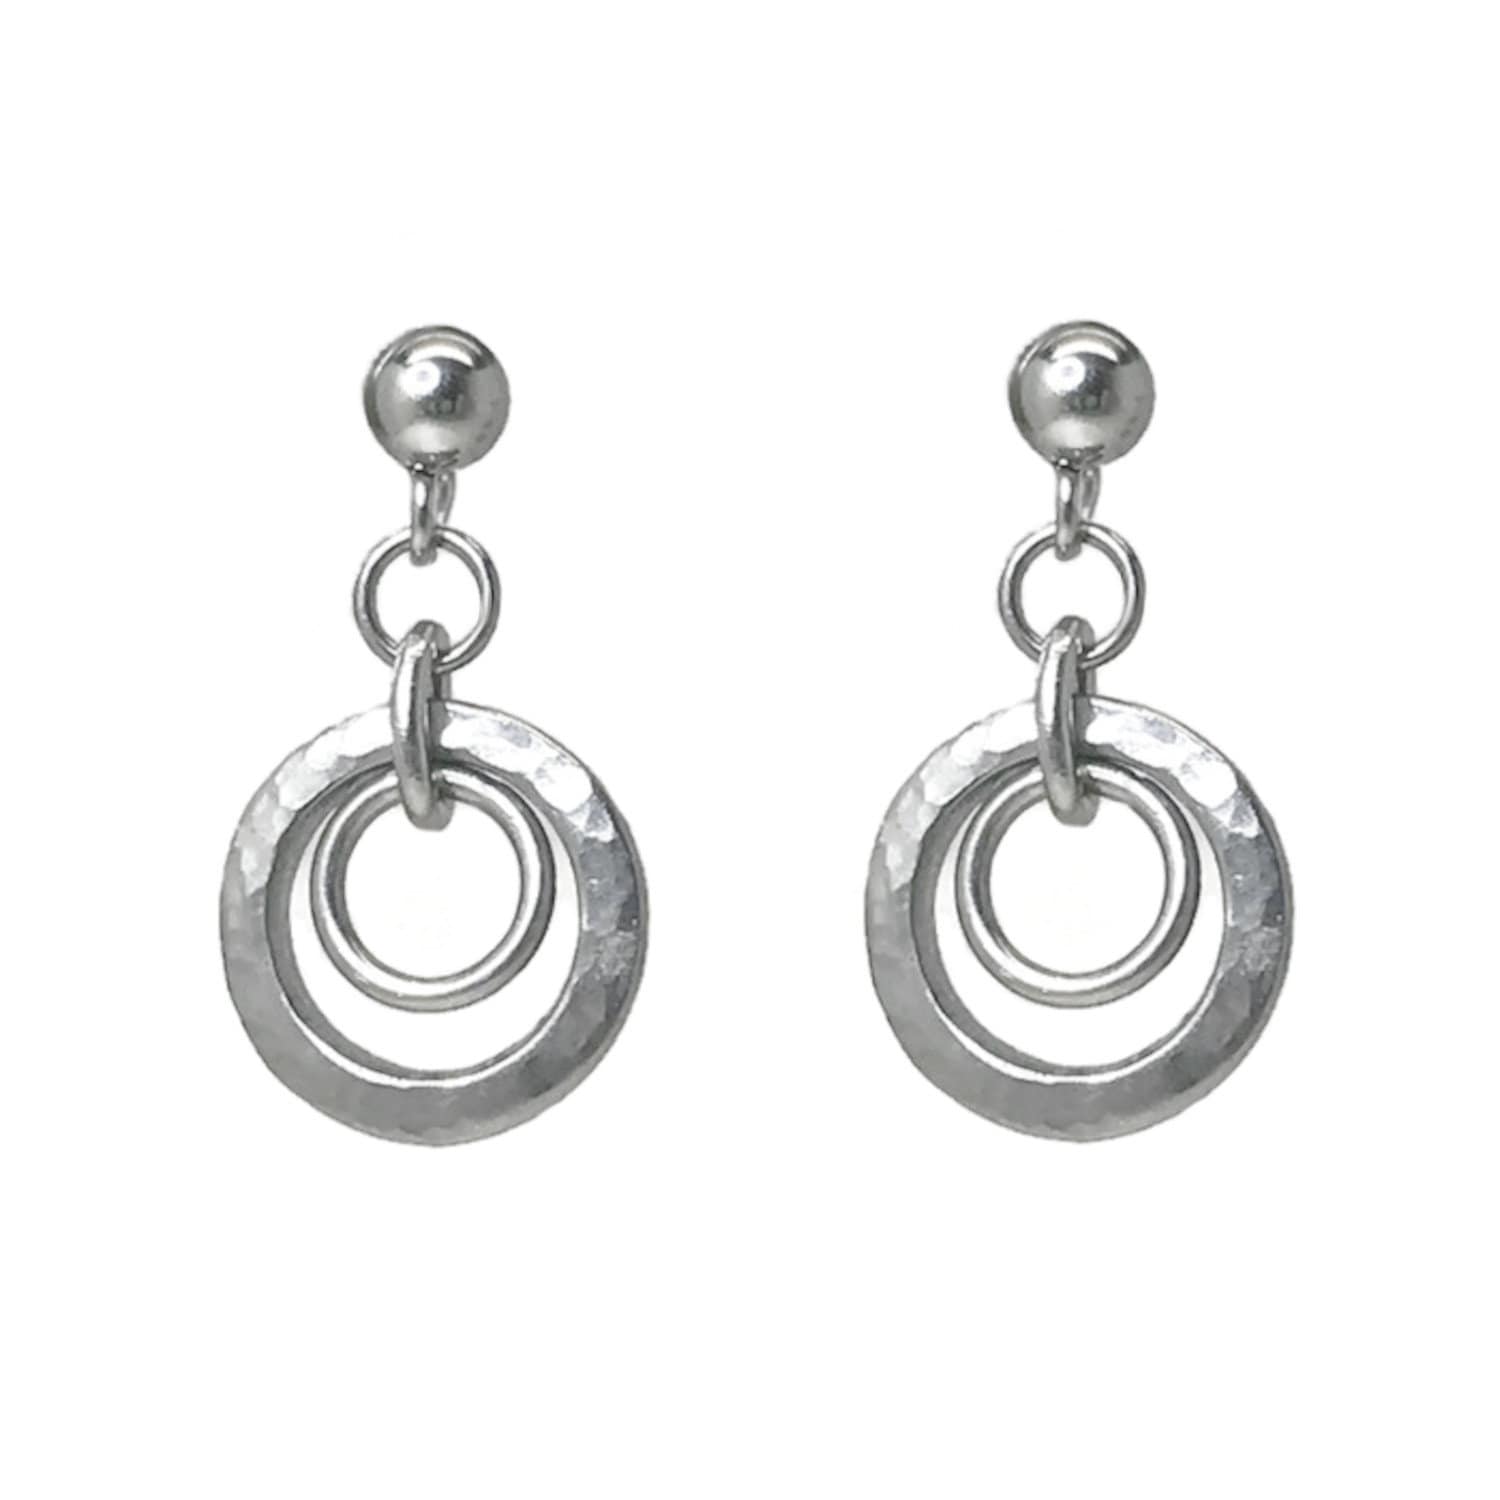 Circle Earrings Dangle Small Circle Earrings Sterling Silver